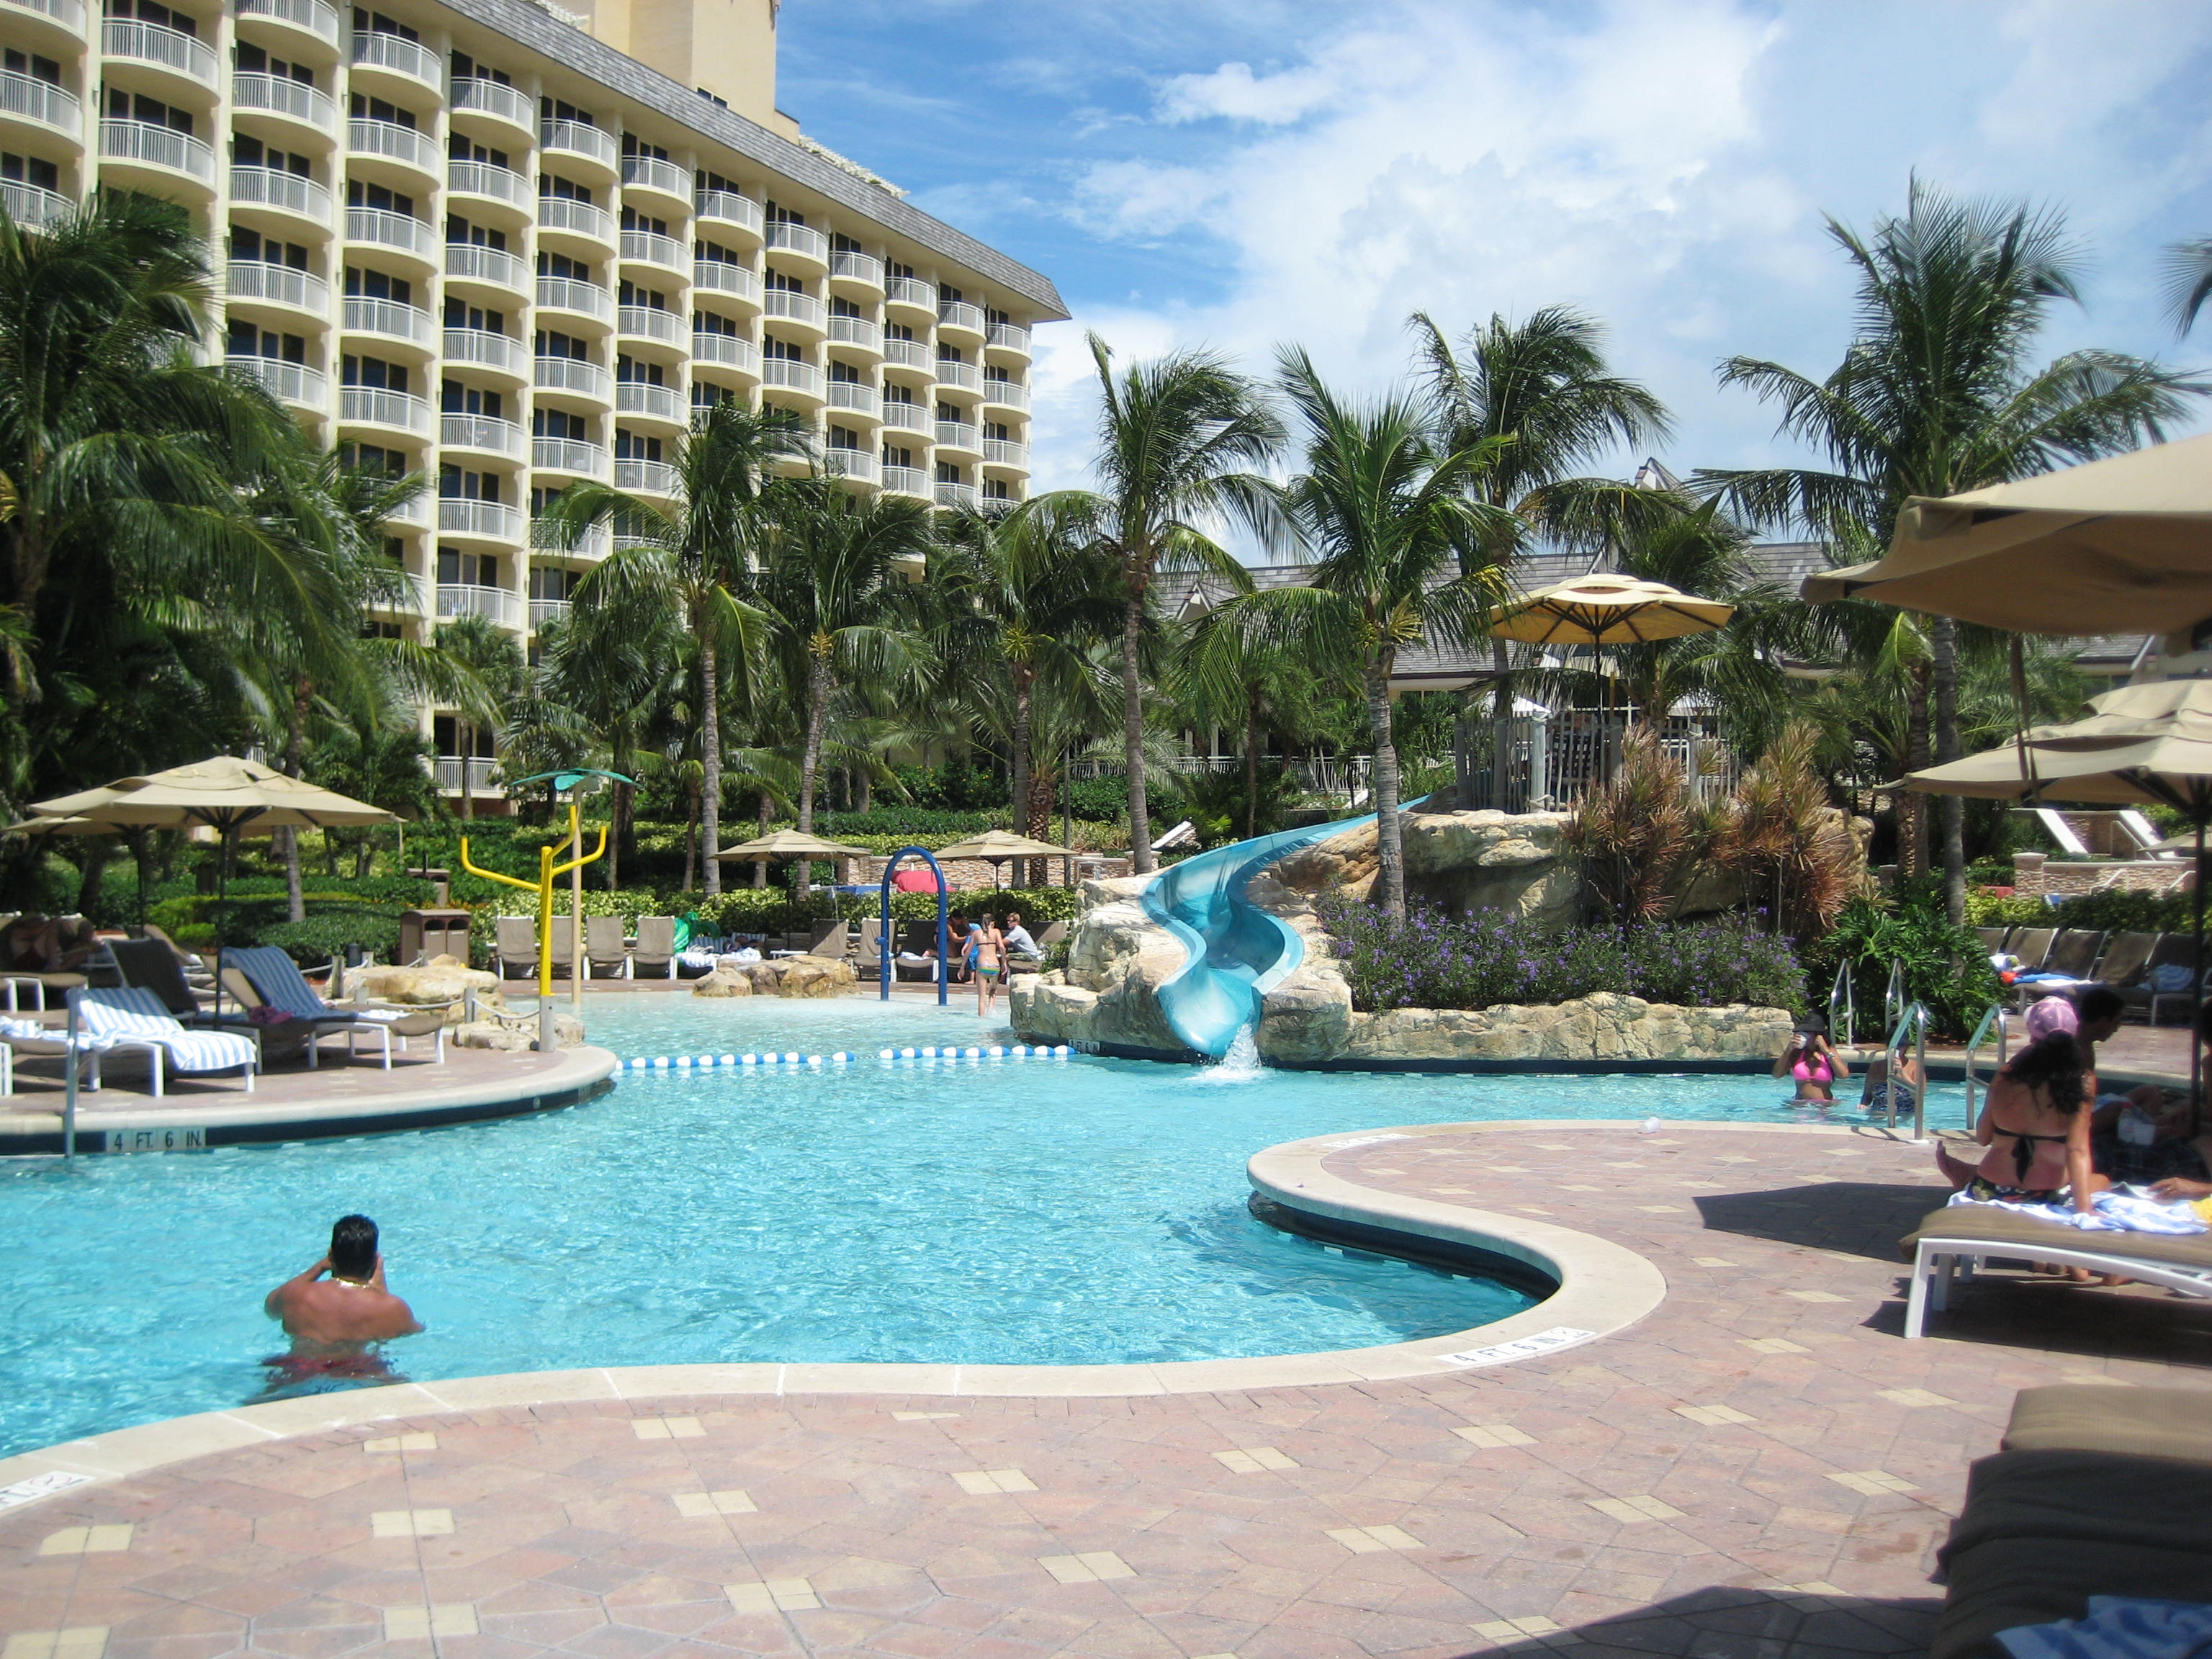 Marco Island Marriott Beach Resort Golf Club & Spa - Florida Vacation